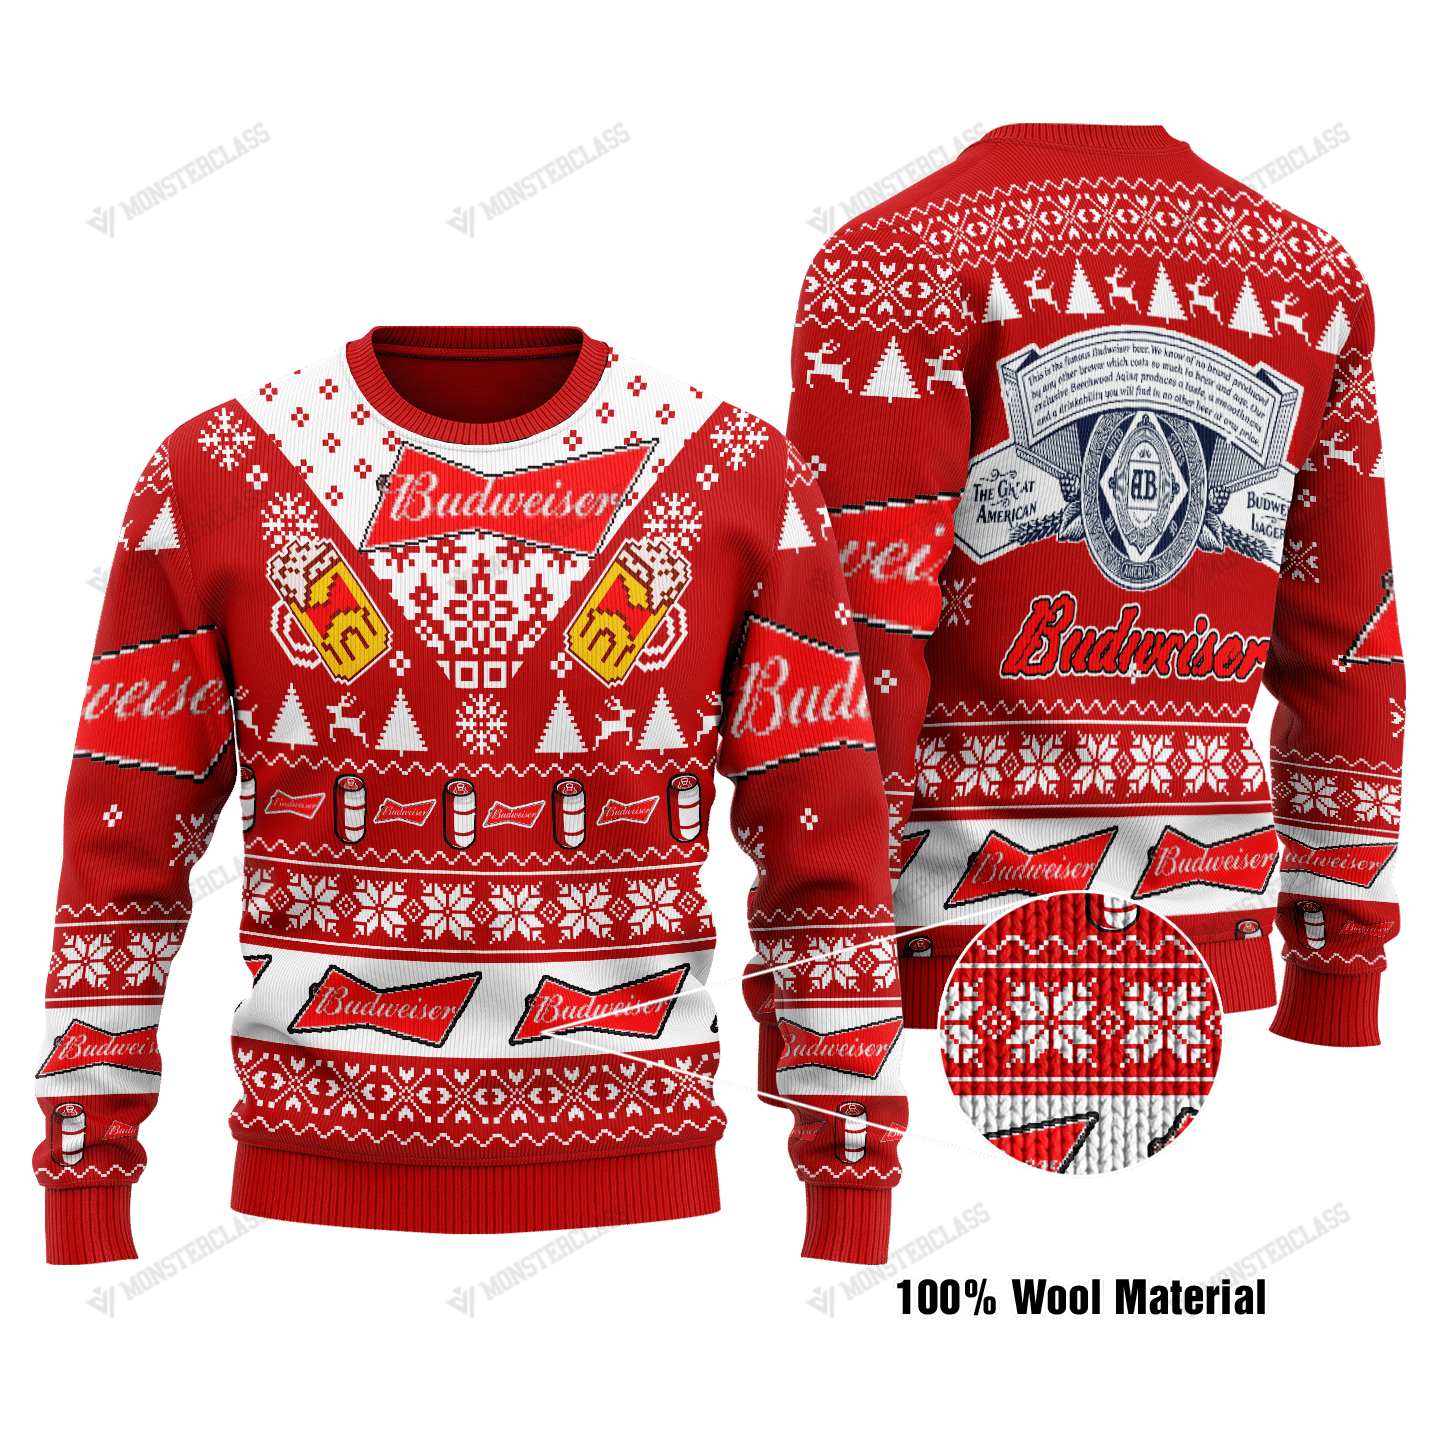 Budweiser beer christmas sweater